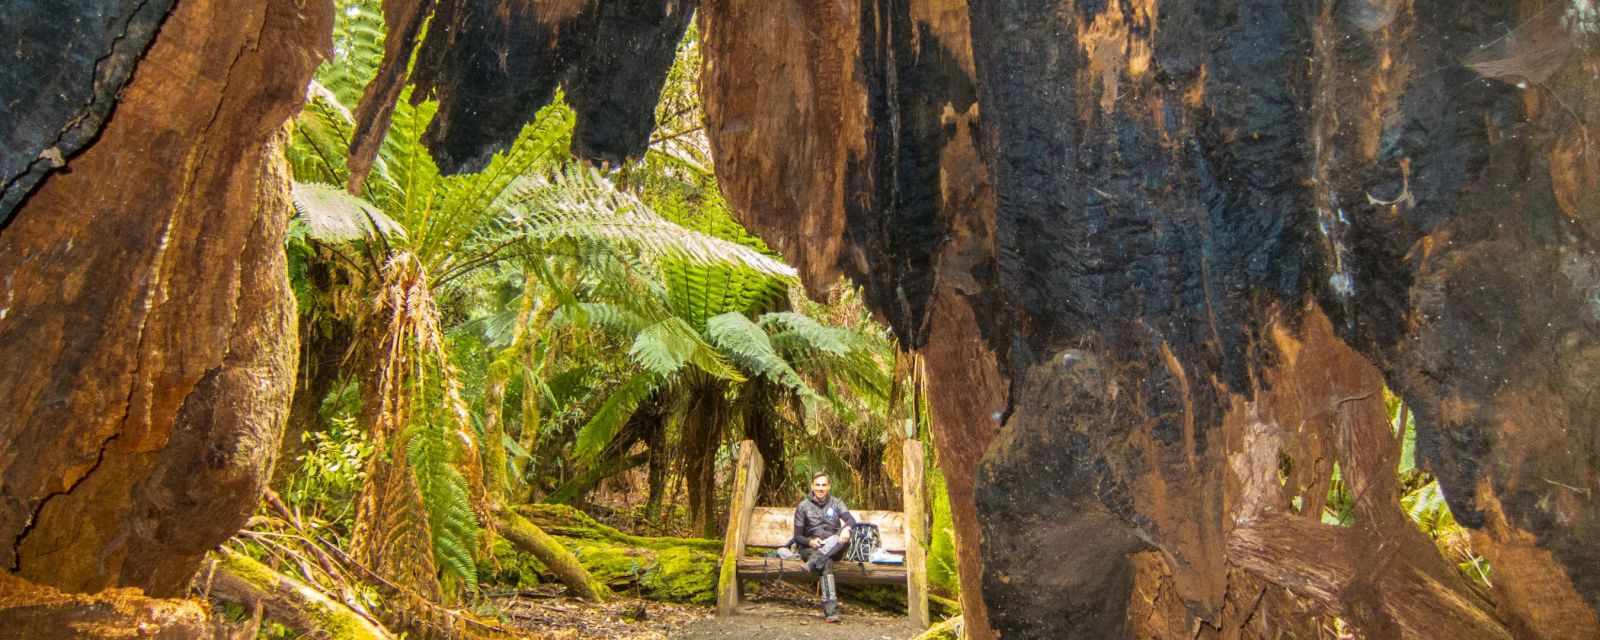 Blue Tier Giant in Tasmania - The Widest Living Tree in Australia